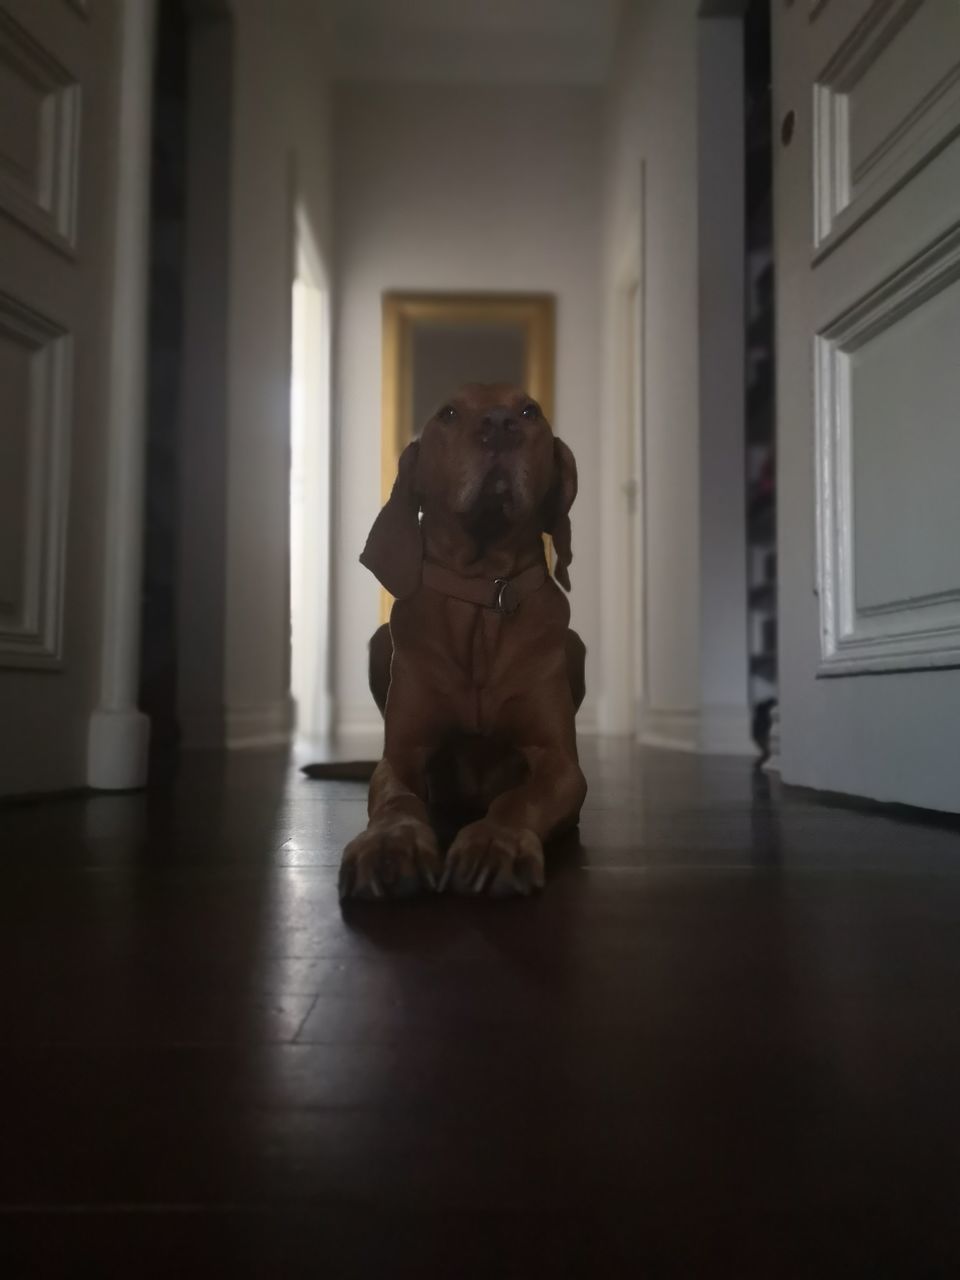 PORTRAIT OF A DOG SITTING ON FLOOR